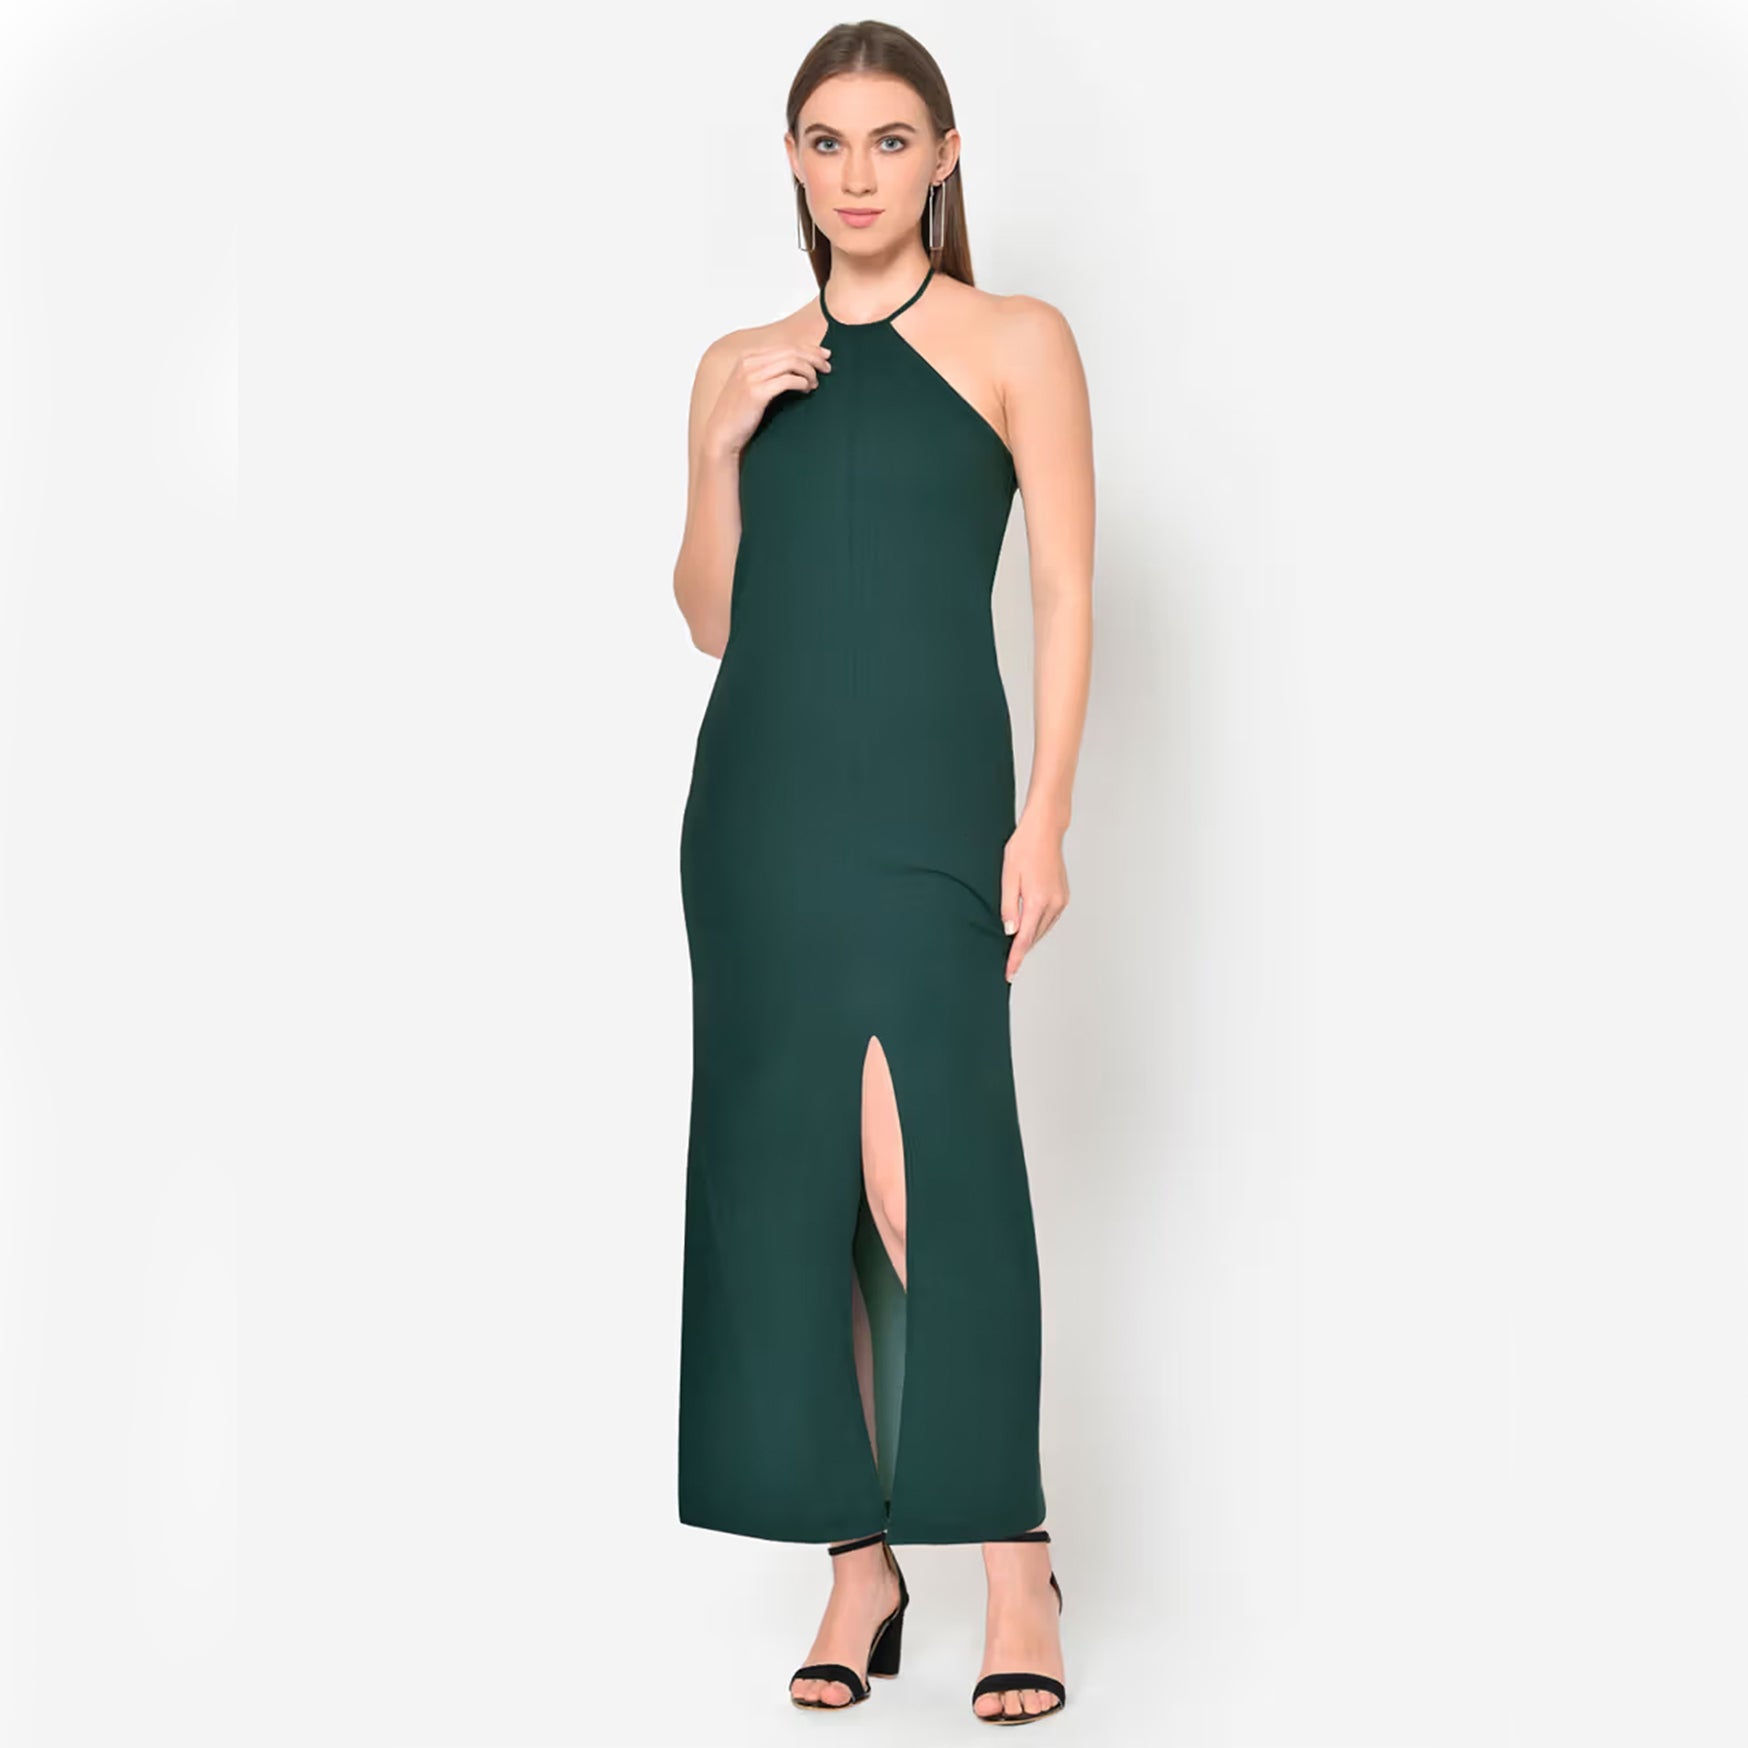 Turquoise Detailing Dress (M)